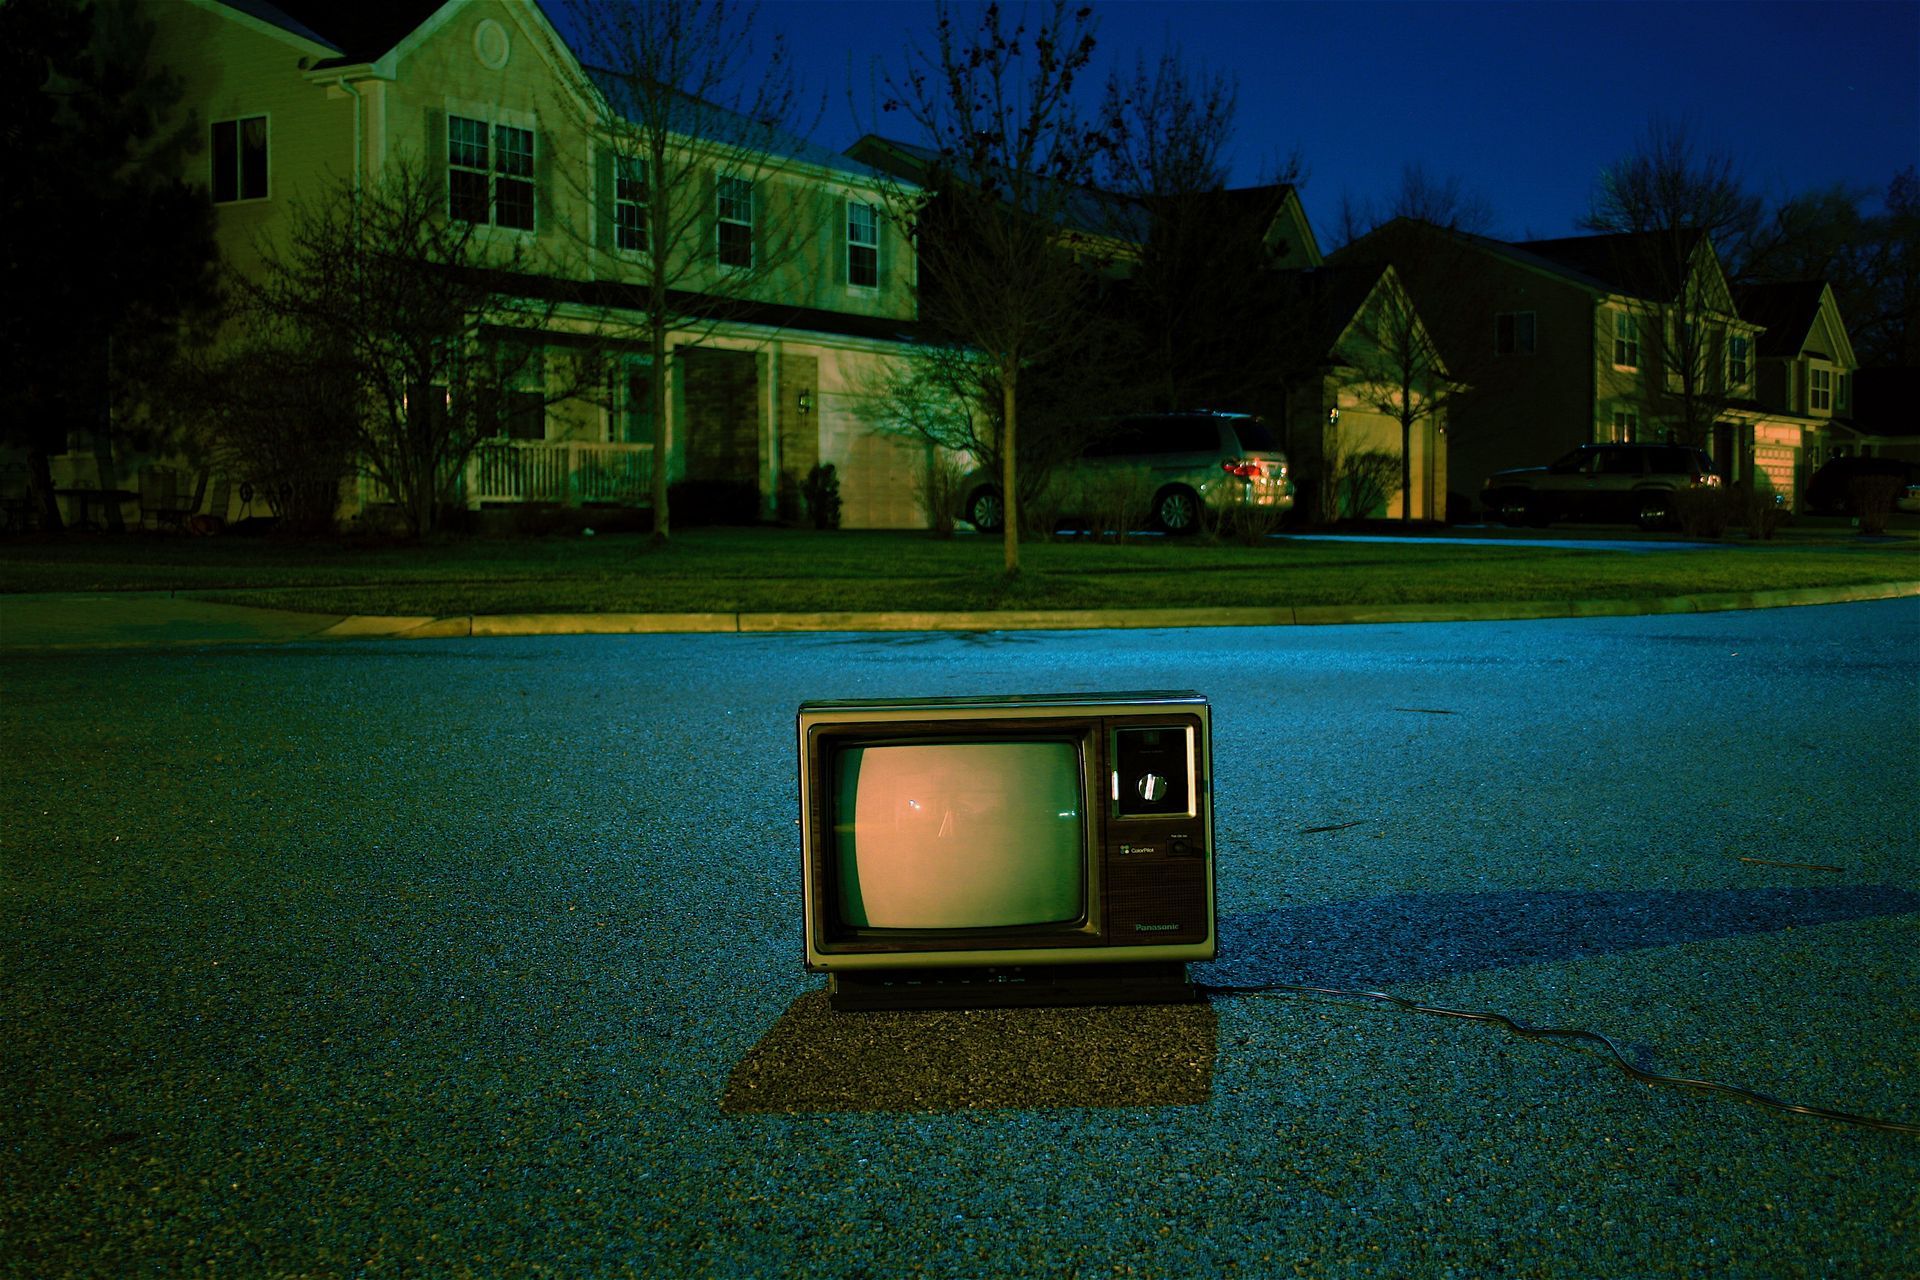 Vintage tv sitting on residential street at night